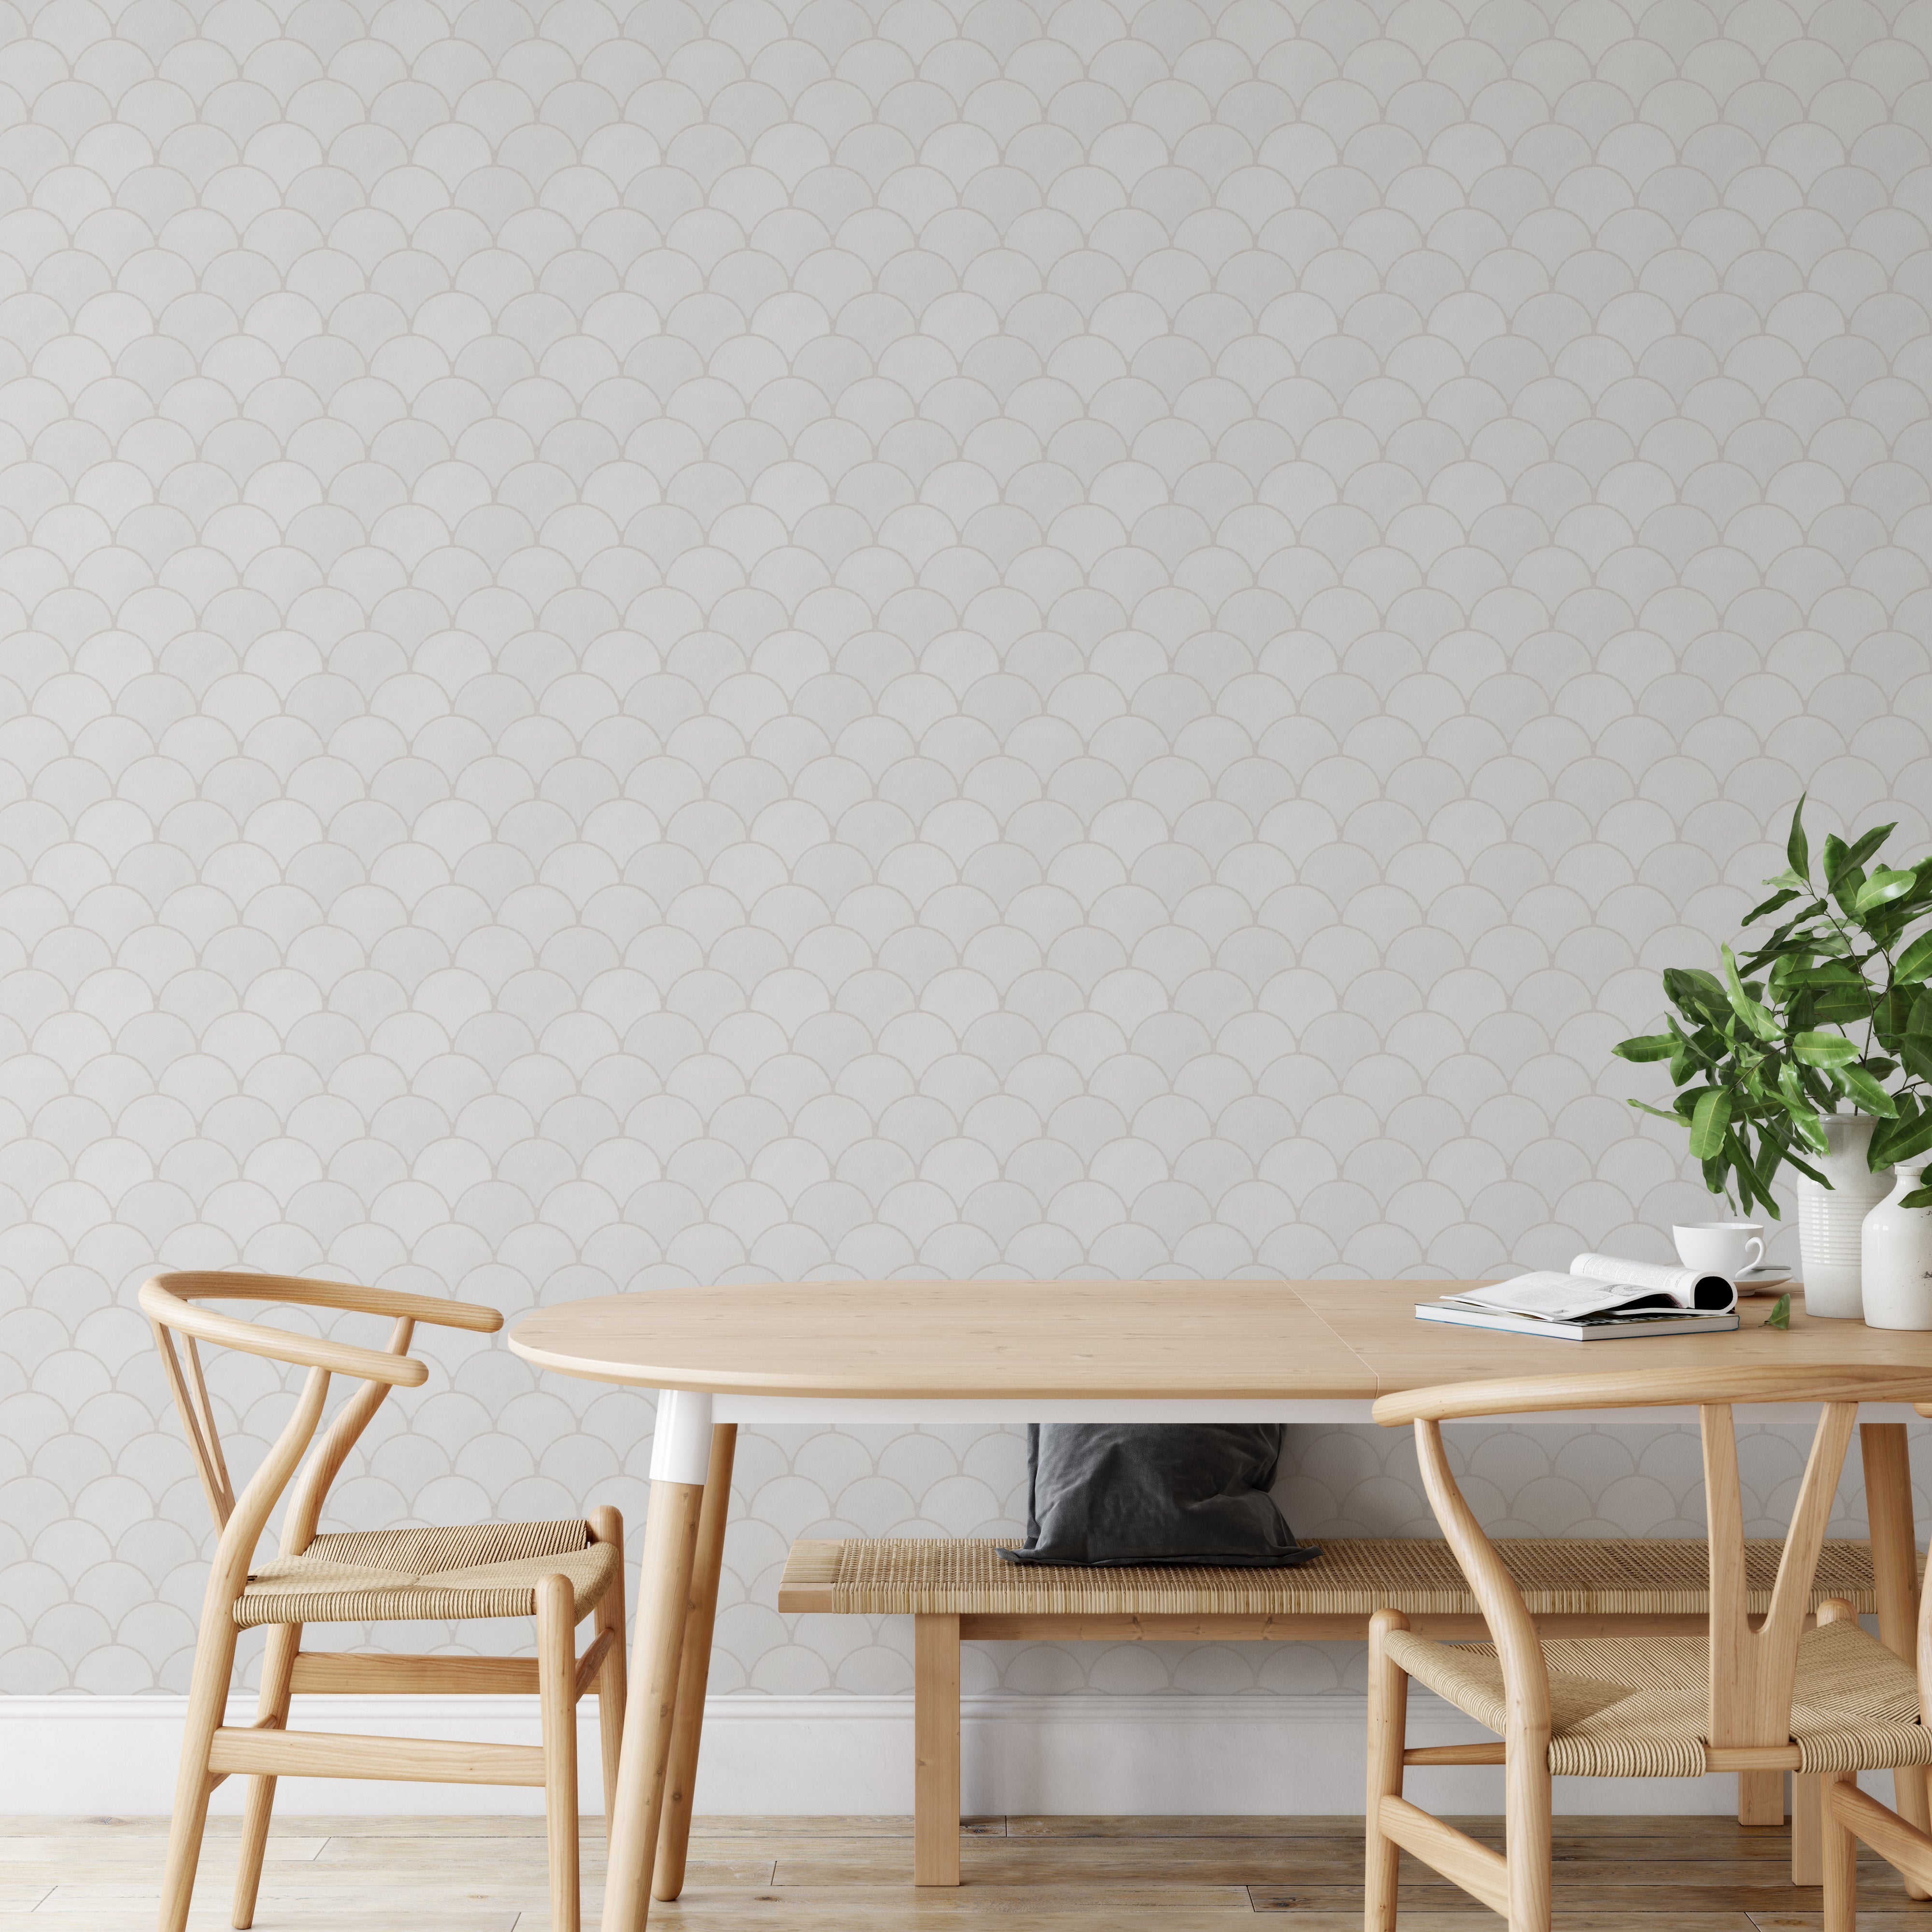 Scallop Tile Wallpaper - Wall Blush from WALL BLUSH